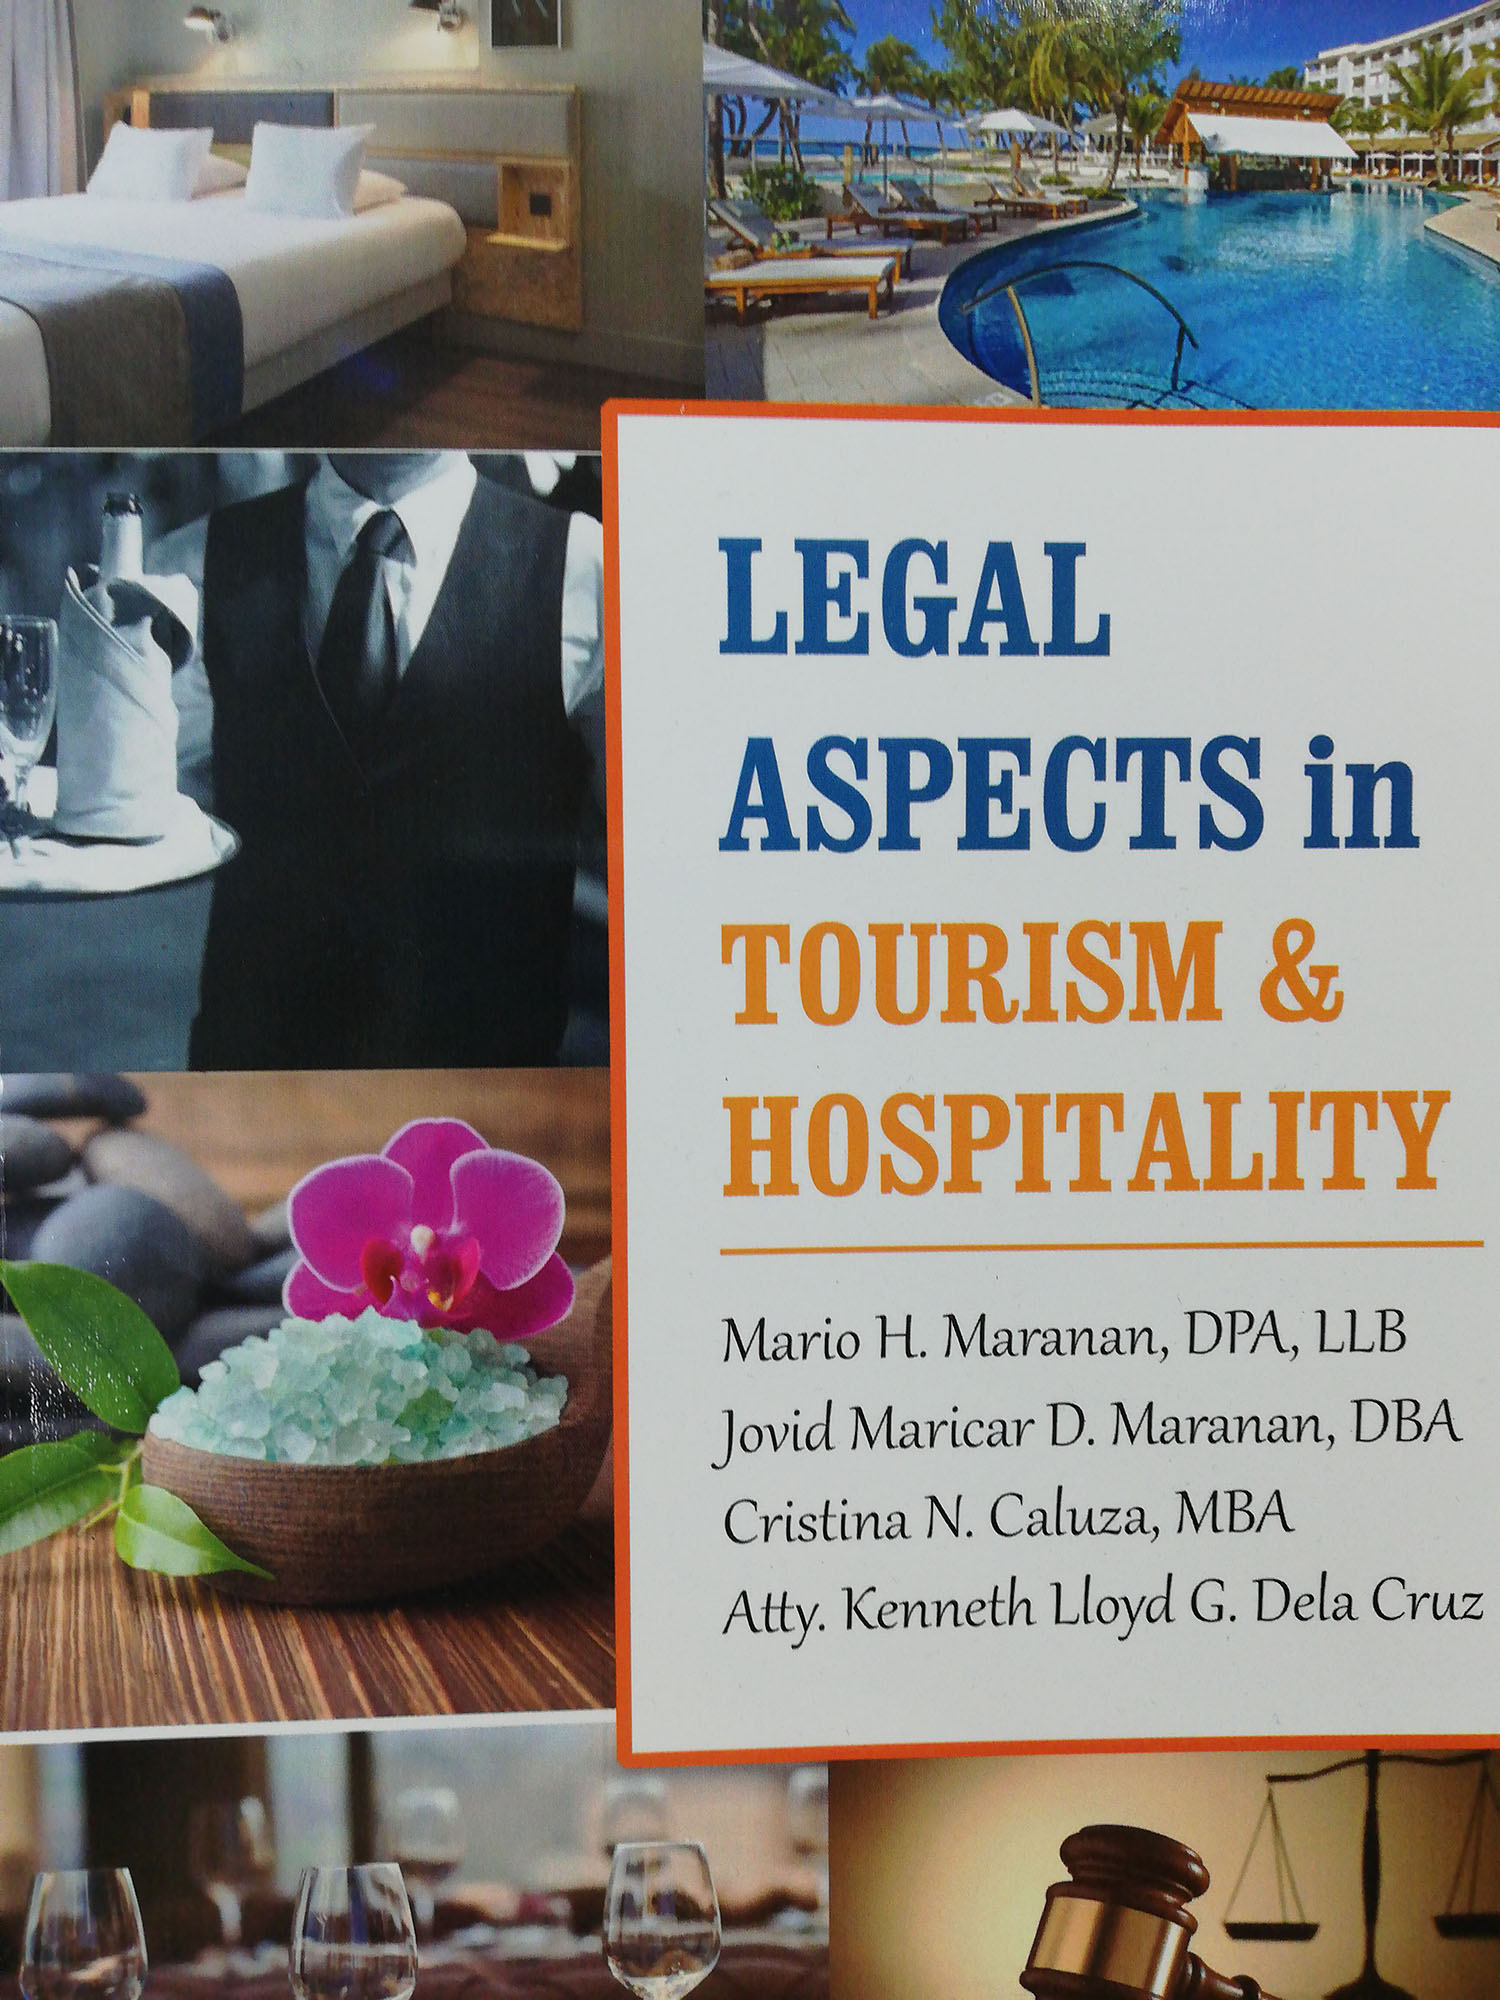 tourism law books